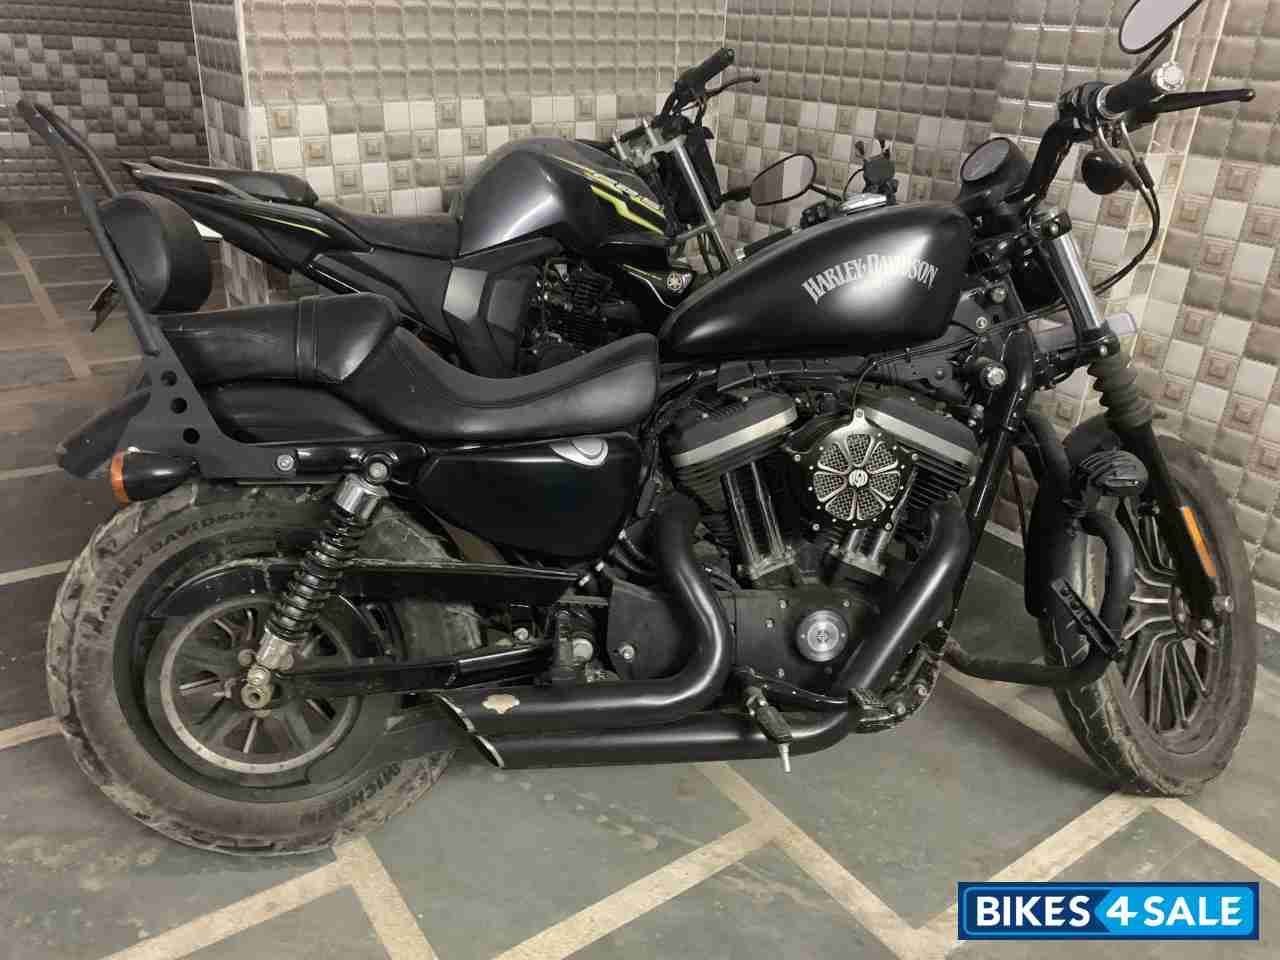 Harley Davidson Iron 883 Second Hand Price In Delhi Promotion Off67